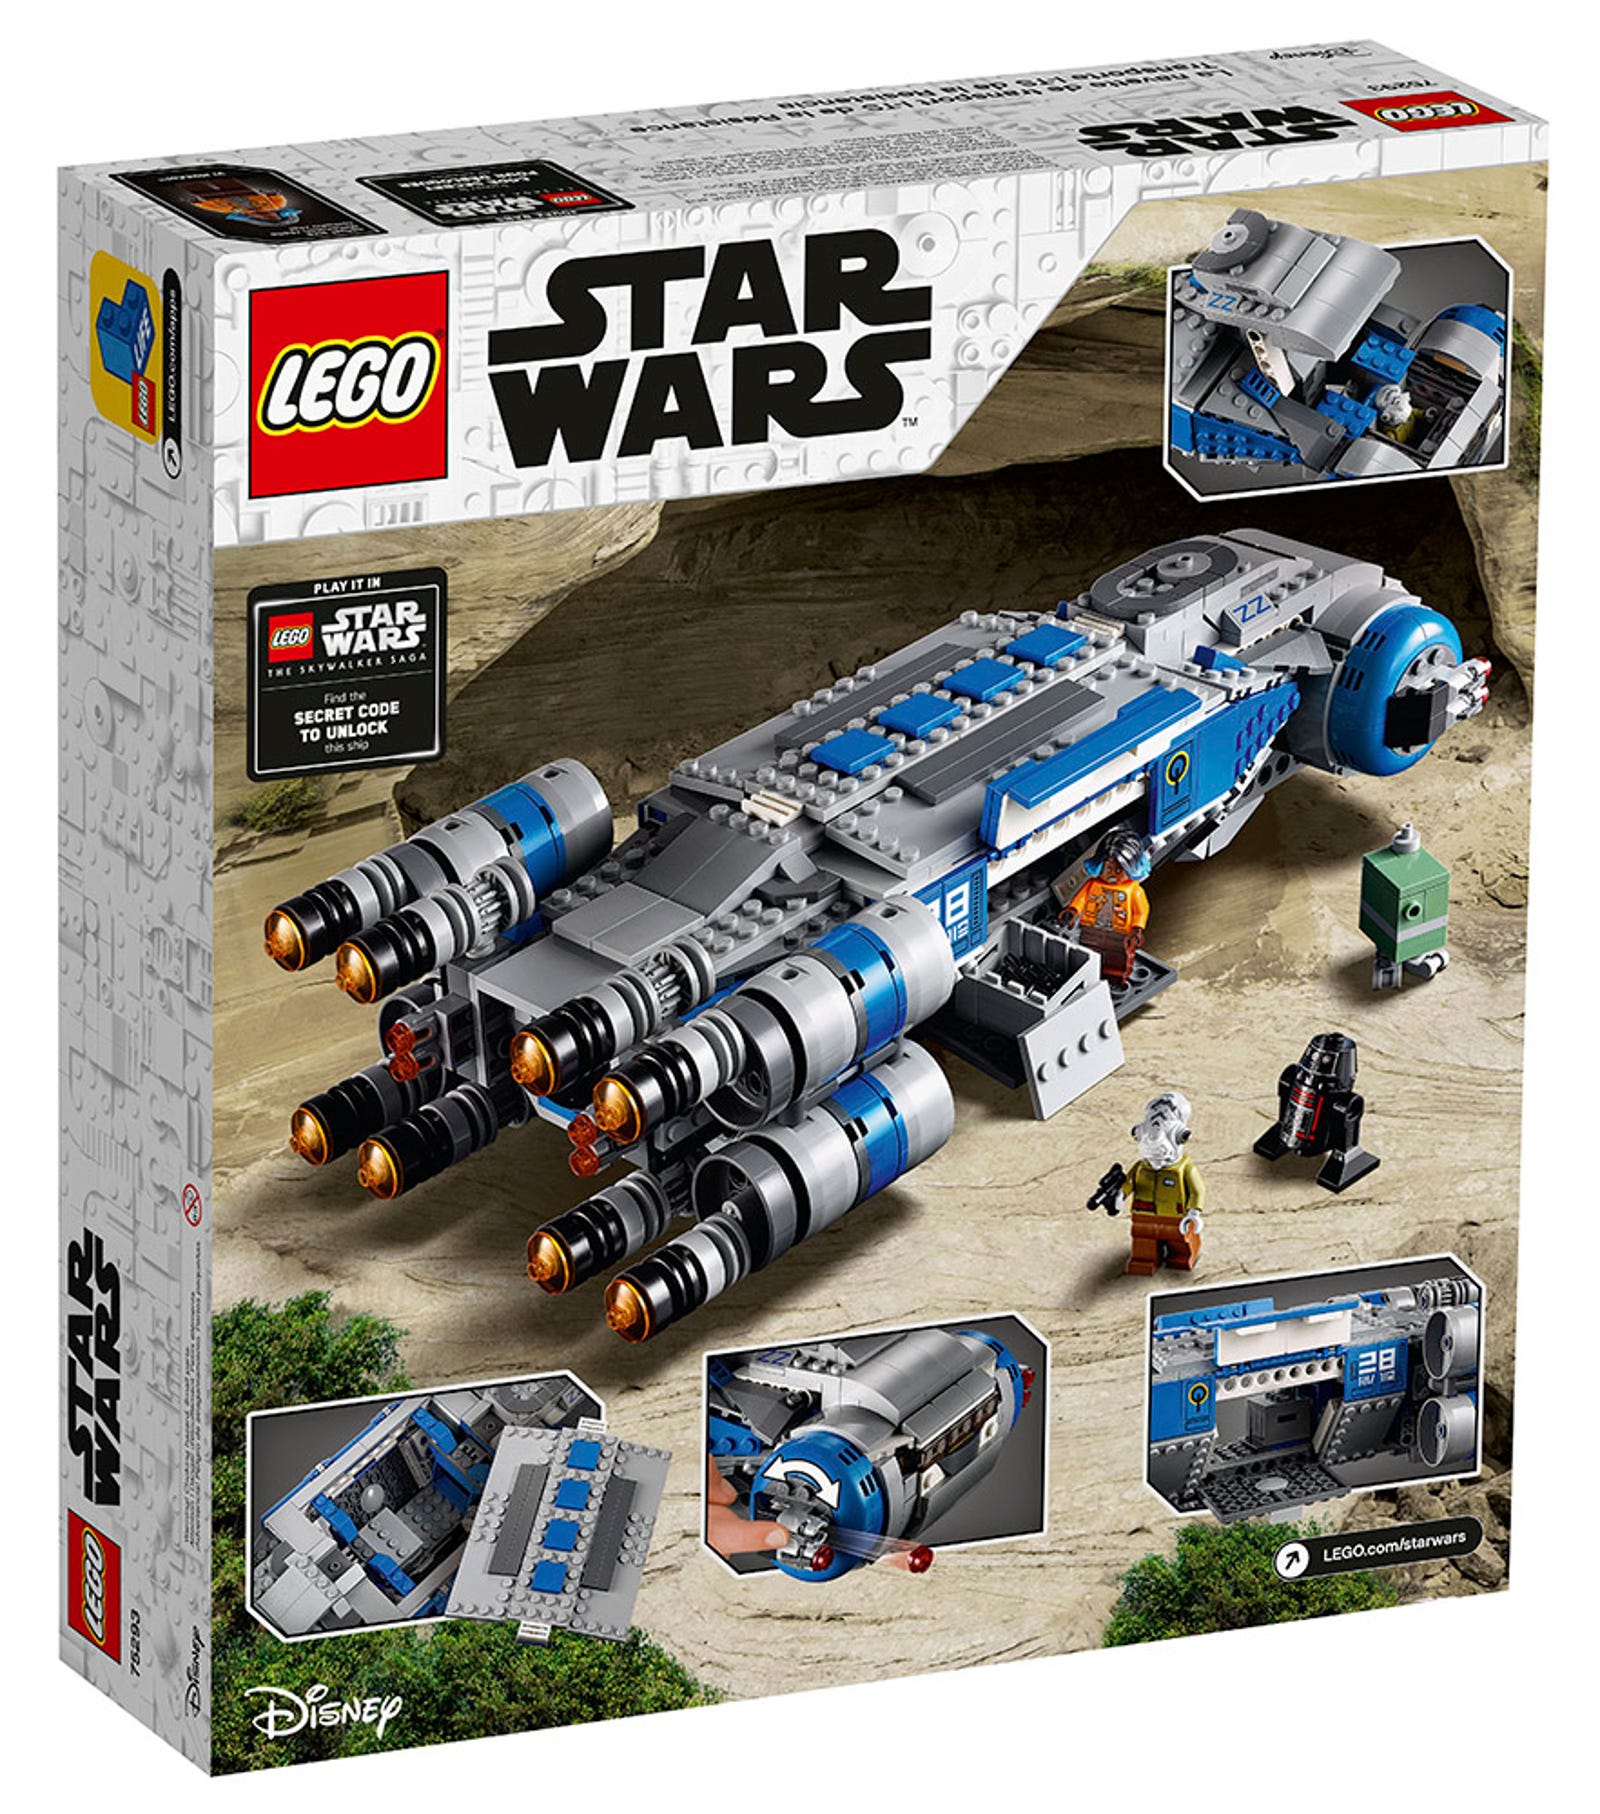 New Lego Star Wars Sets Ahsoka, The Mandalorian, Galaxy's Edge